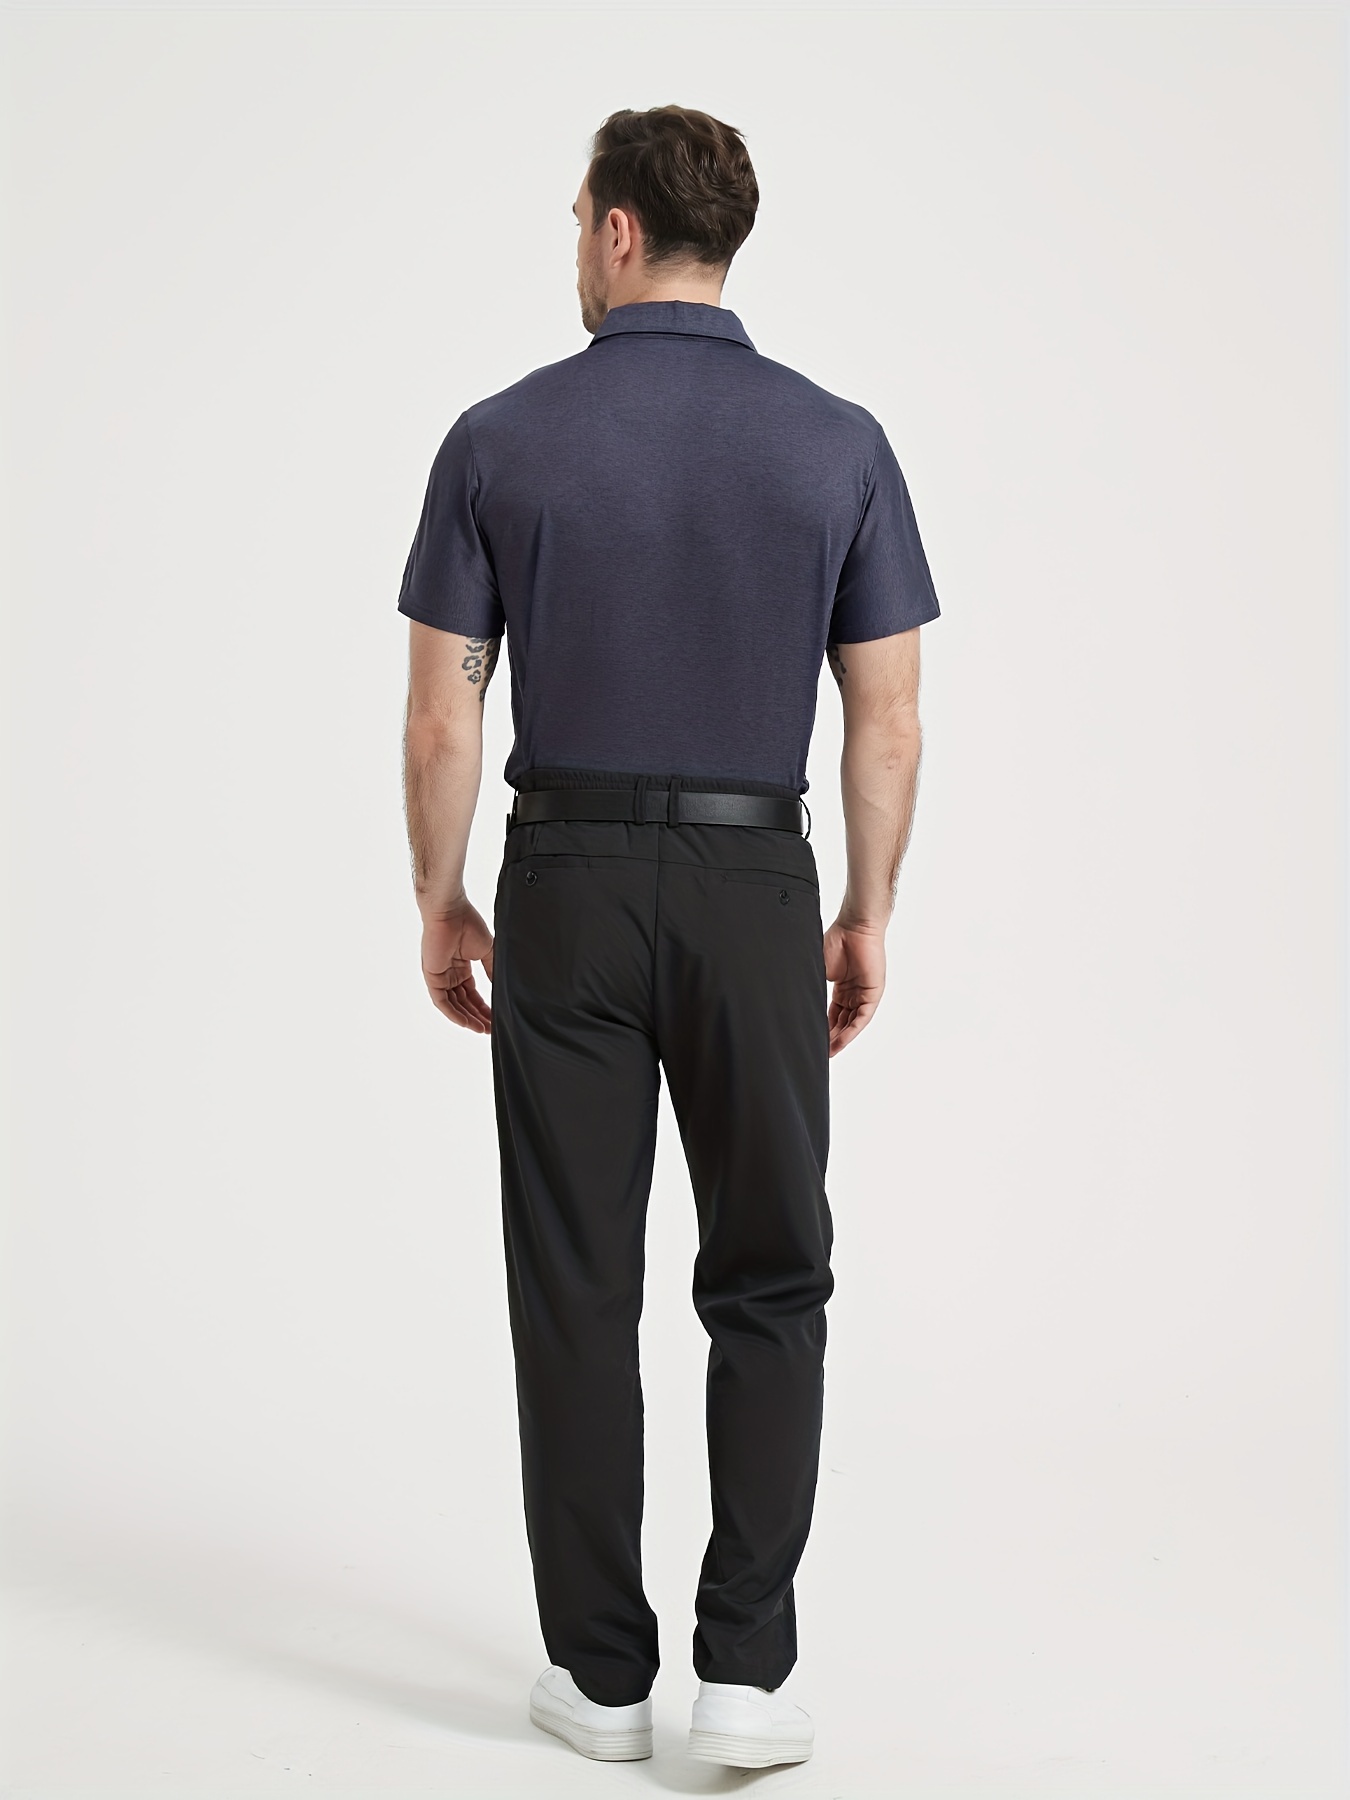 eczipvz Dress Shirts for Men Men's Quick Dry Short Sleeve Polo